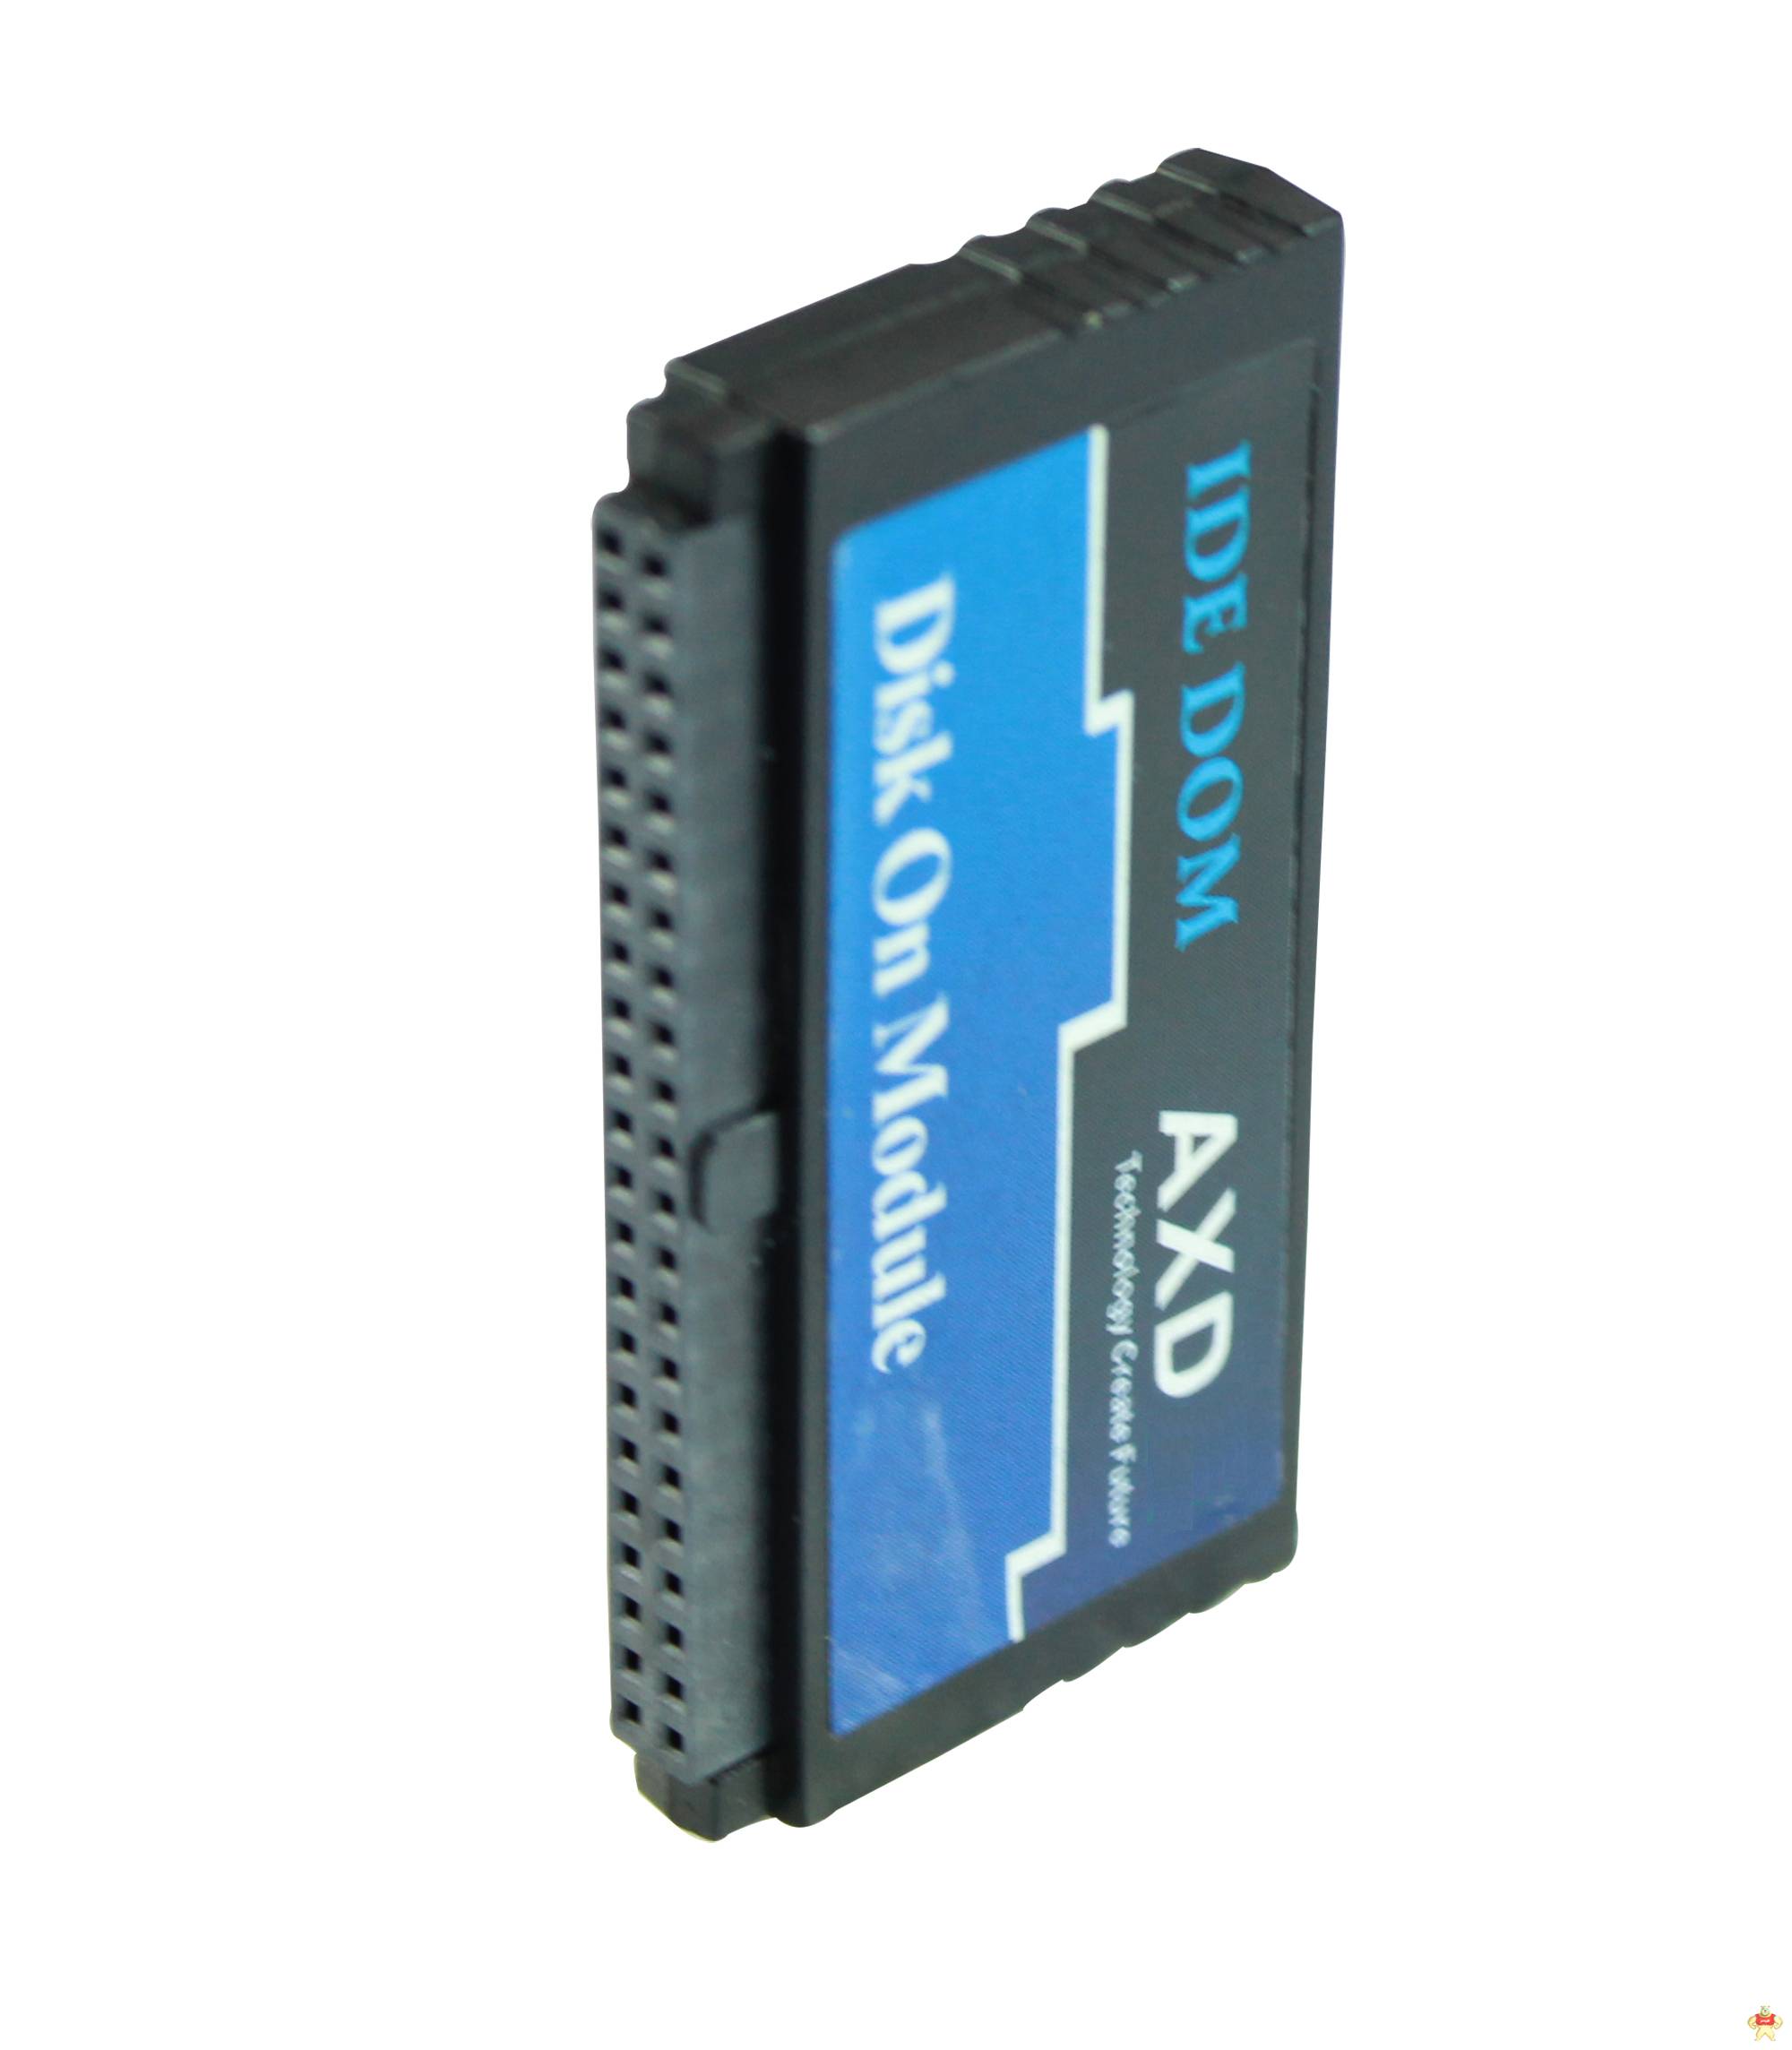 IDE DOM工业电子盘 44-PIN立式 SLC 16GB 44-PIN IDE DOM,44-PIN IDE DOM电子硬盘,IDE DOM电子硬盘,DOM 电子硬盘,工业级 IDE DOM